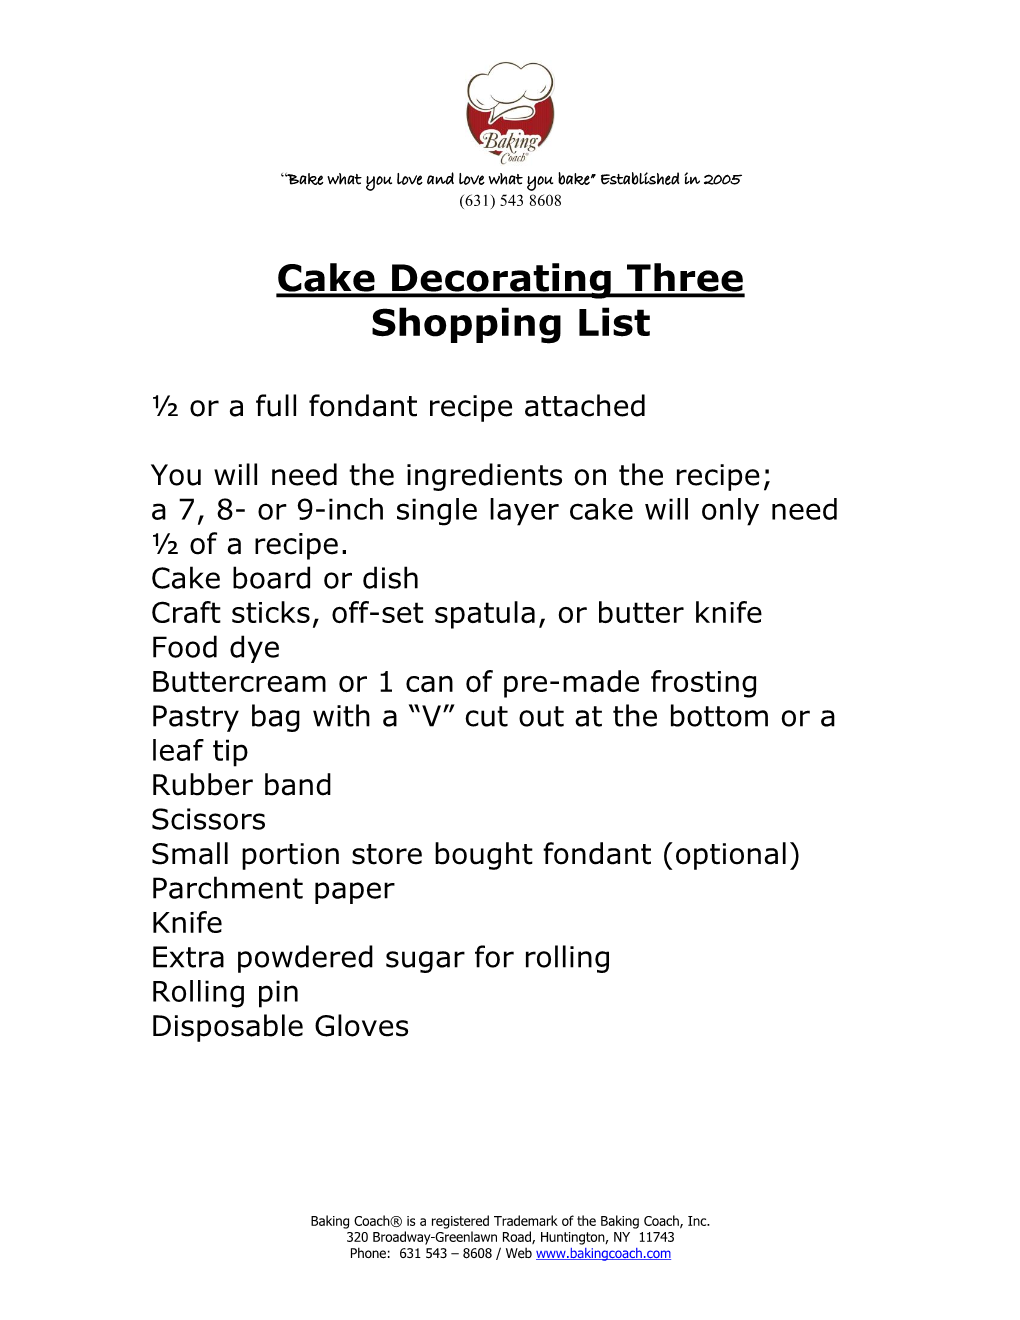 Cake Decorating Three Shopping List